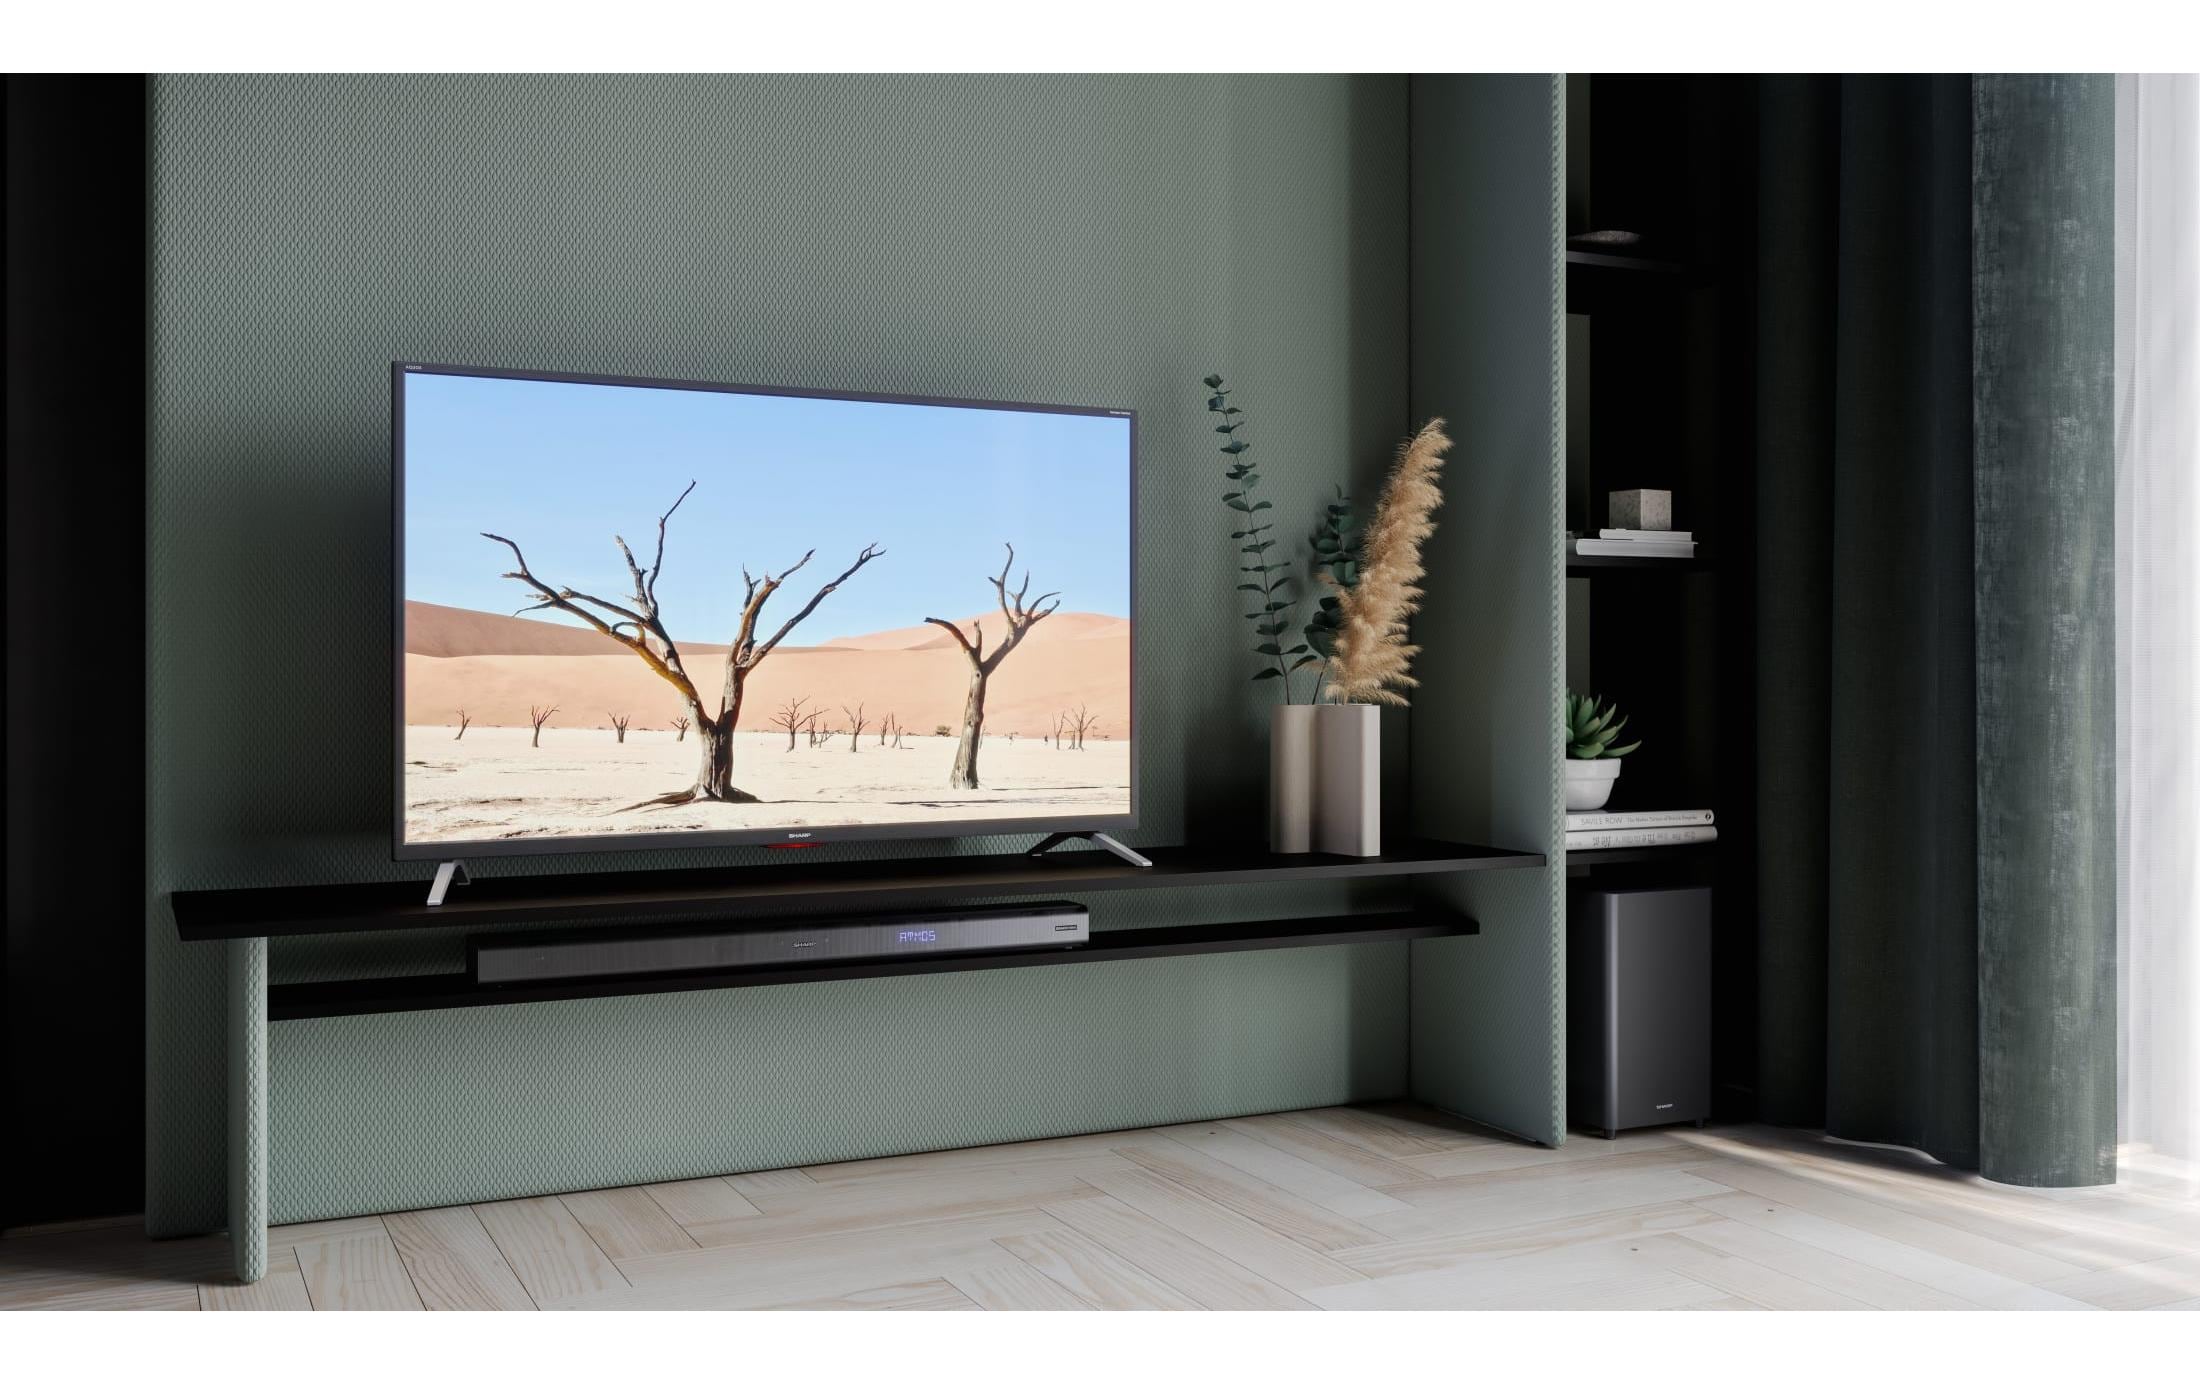 Sharp TV 43BL5EA 43, 3840 x 2160 (Ultra HD 4K), LED-LCD